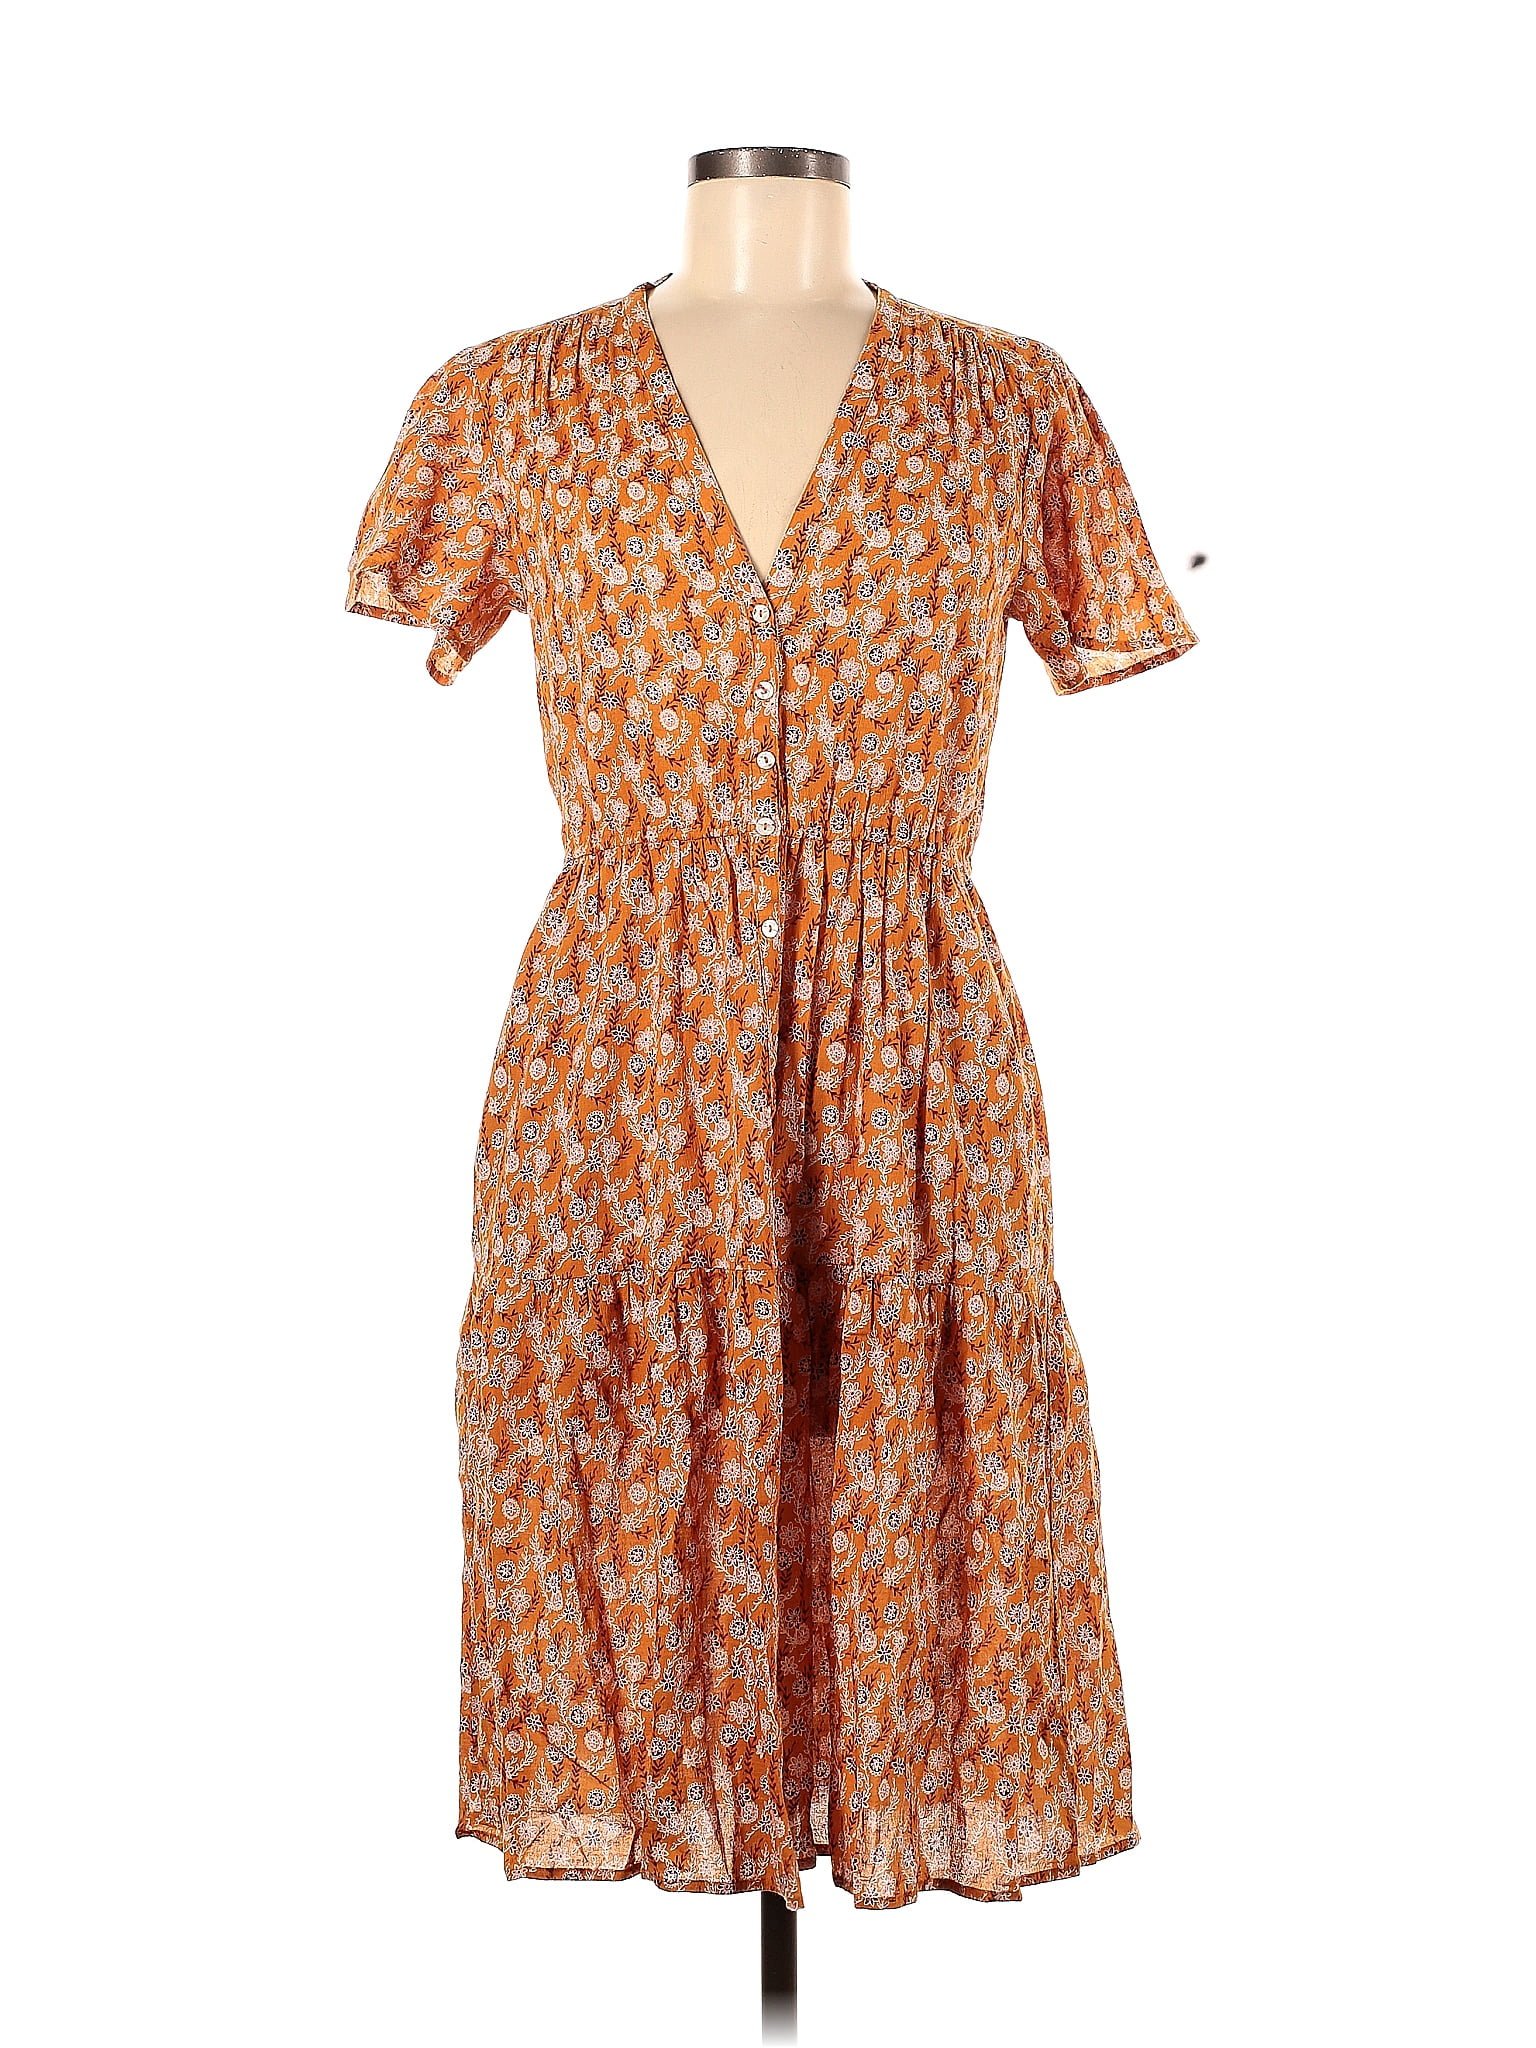 Xirena 100% Cotton Orange Casual Dress Size XS - 80% off | thredUP